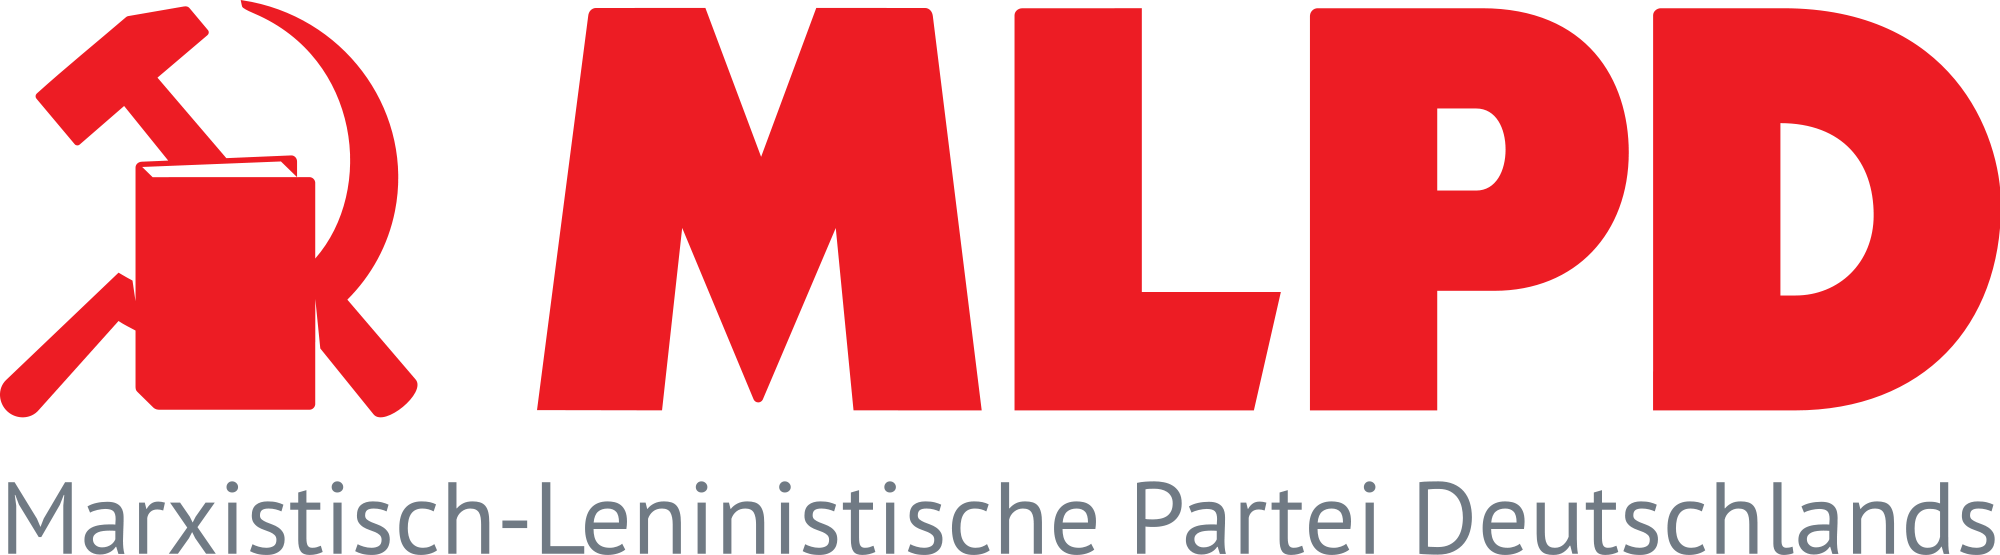 2000px-MLPD Logo 2011 2.svg